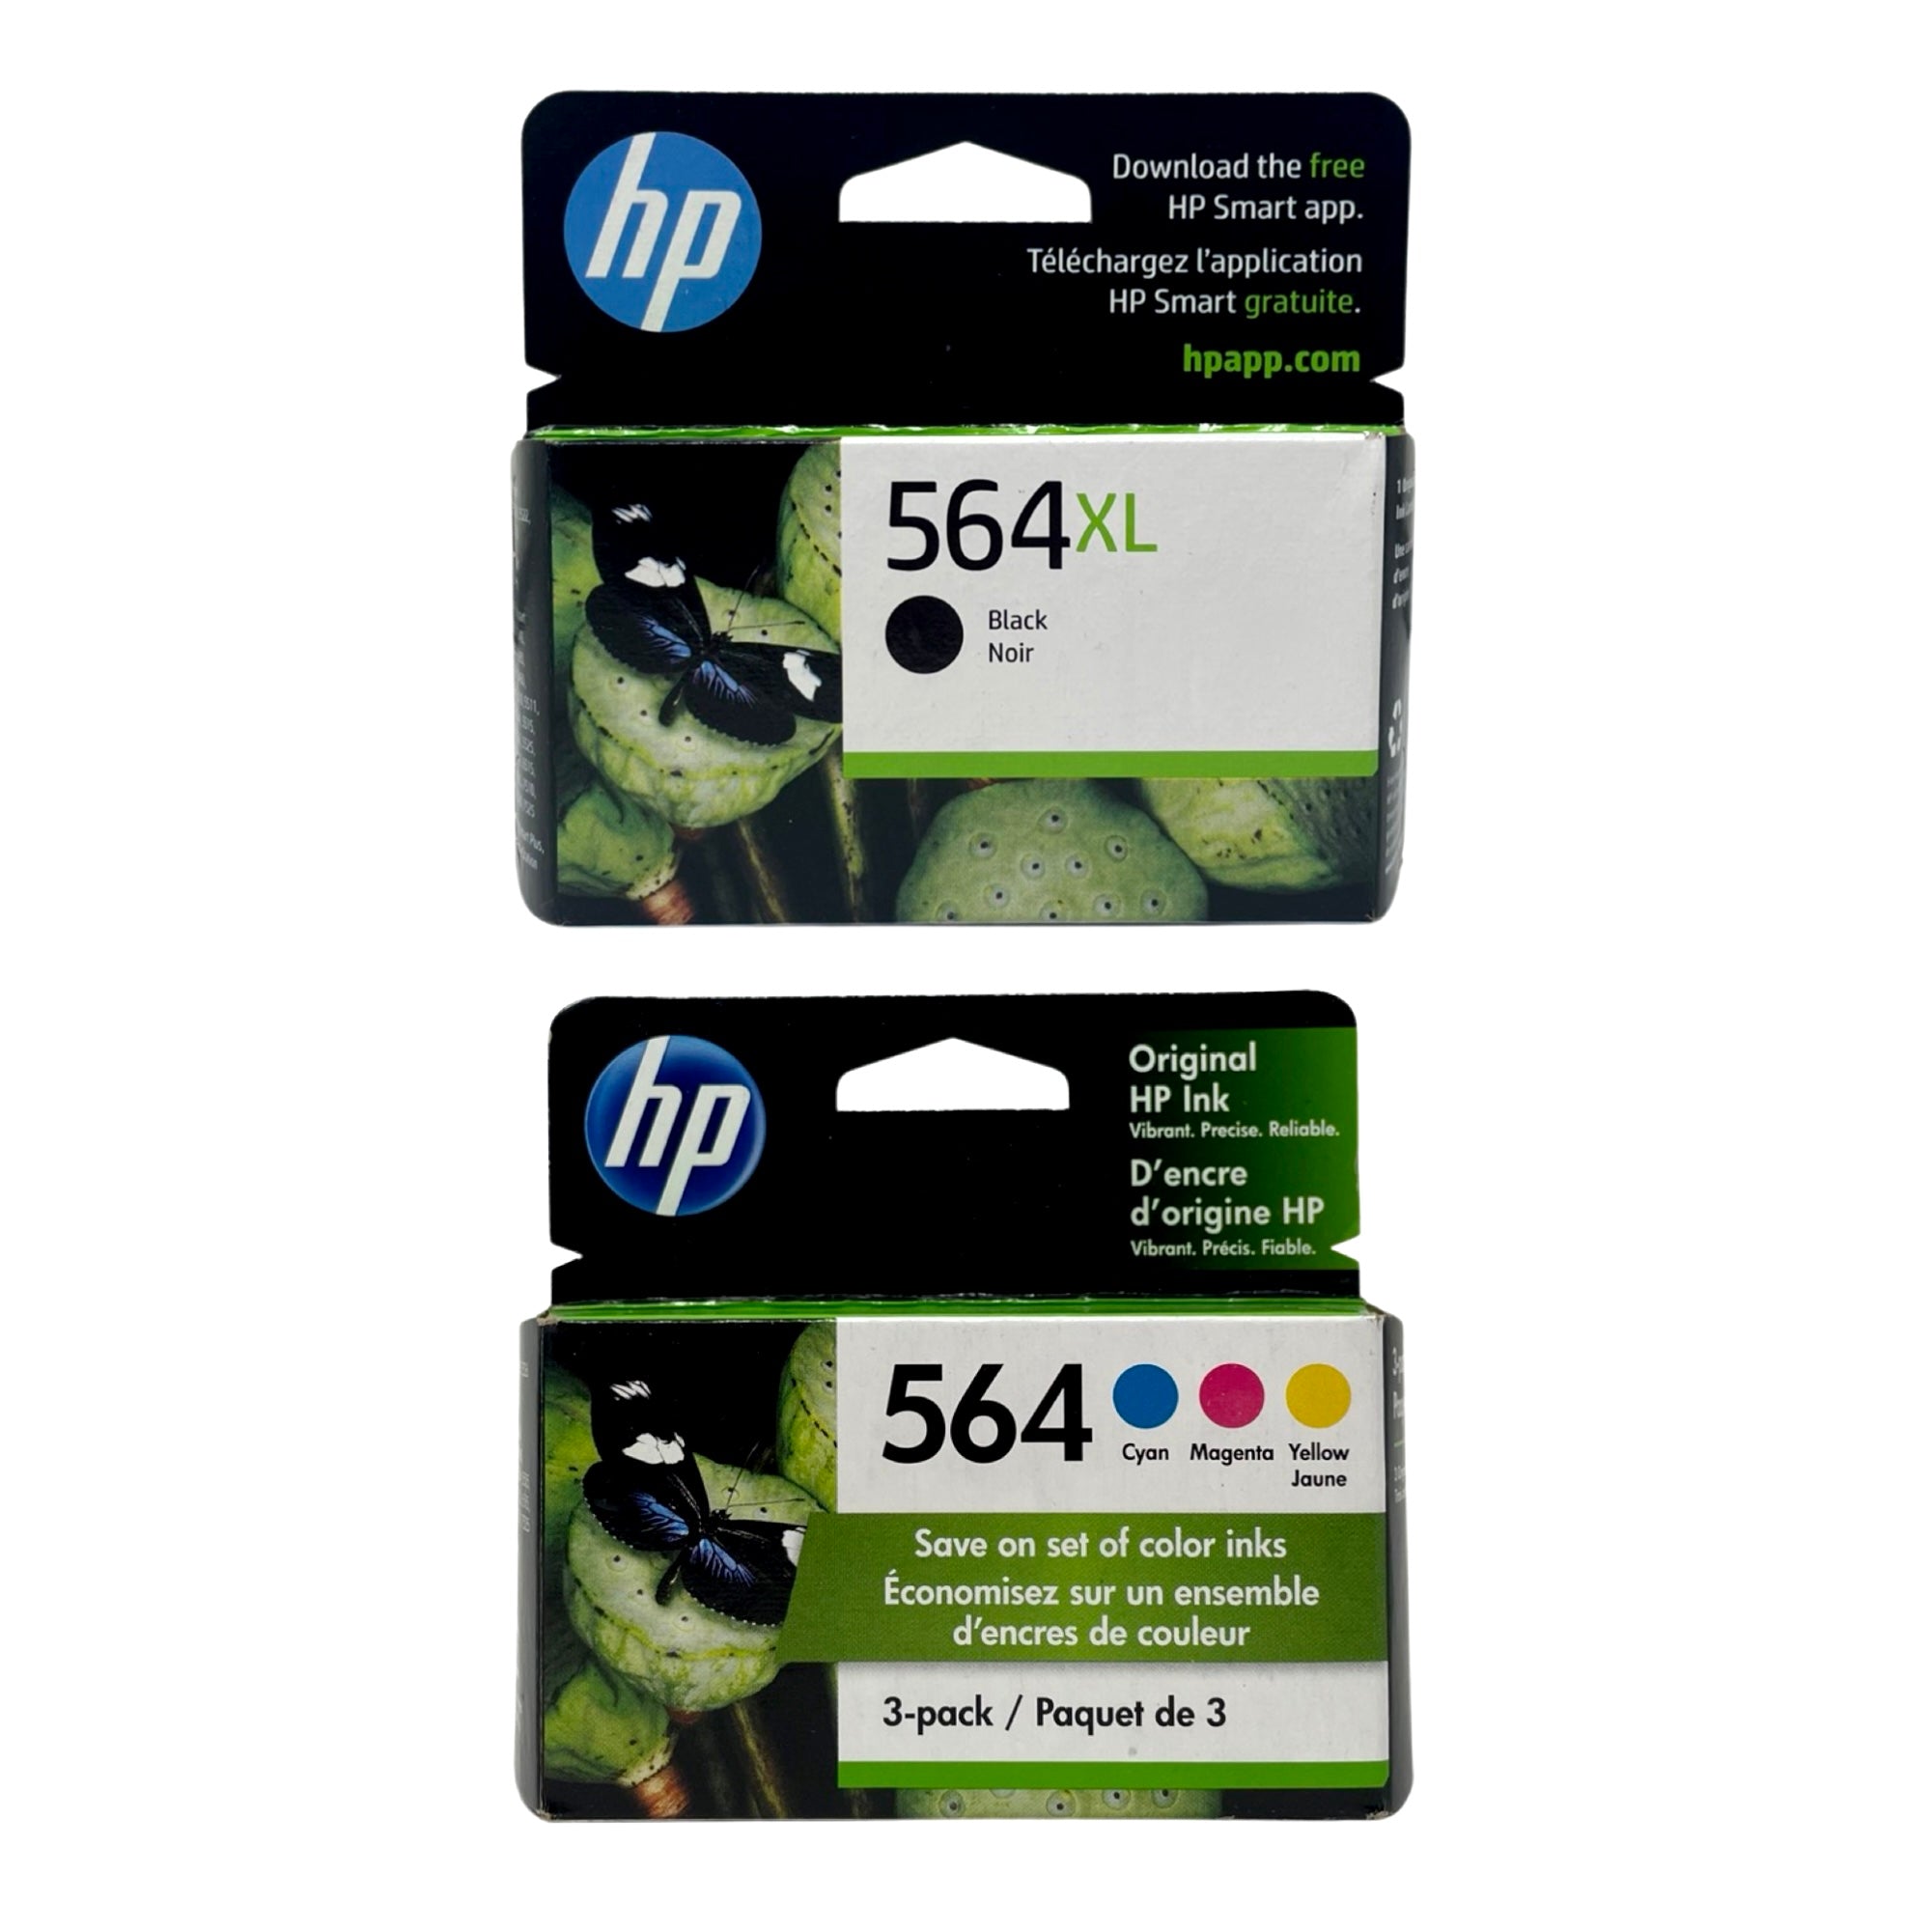 HP 564XL / HP 564 Ink SET - Combo 2 Pack - High Yield Black / Standard Yield Cyan Magenta Yellow - Original HP Ink Cartridges